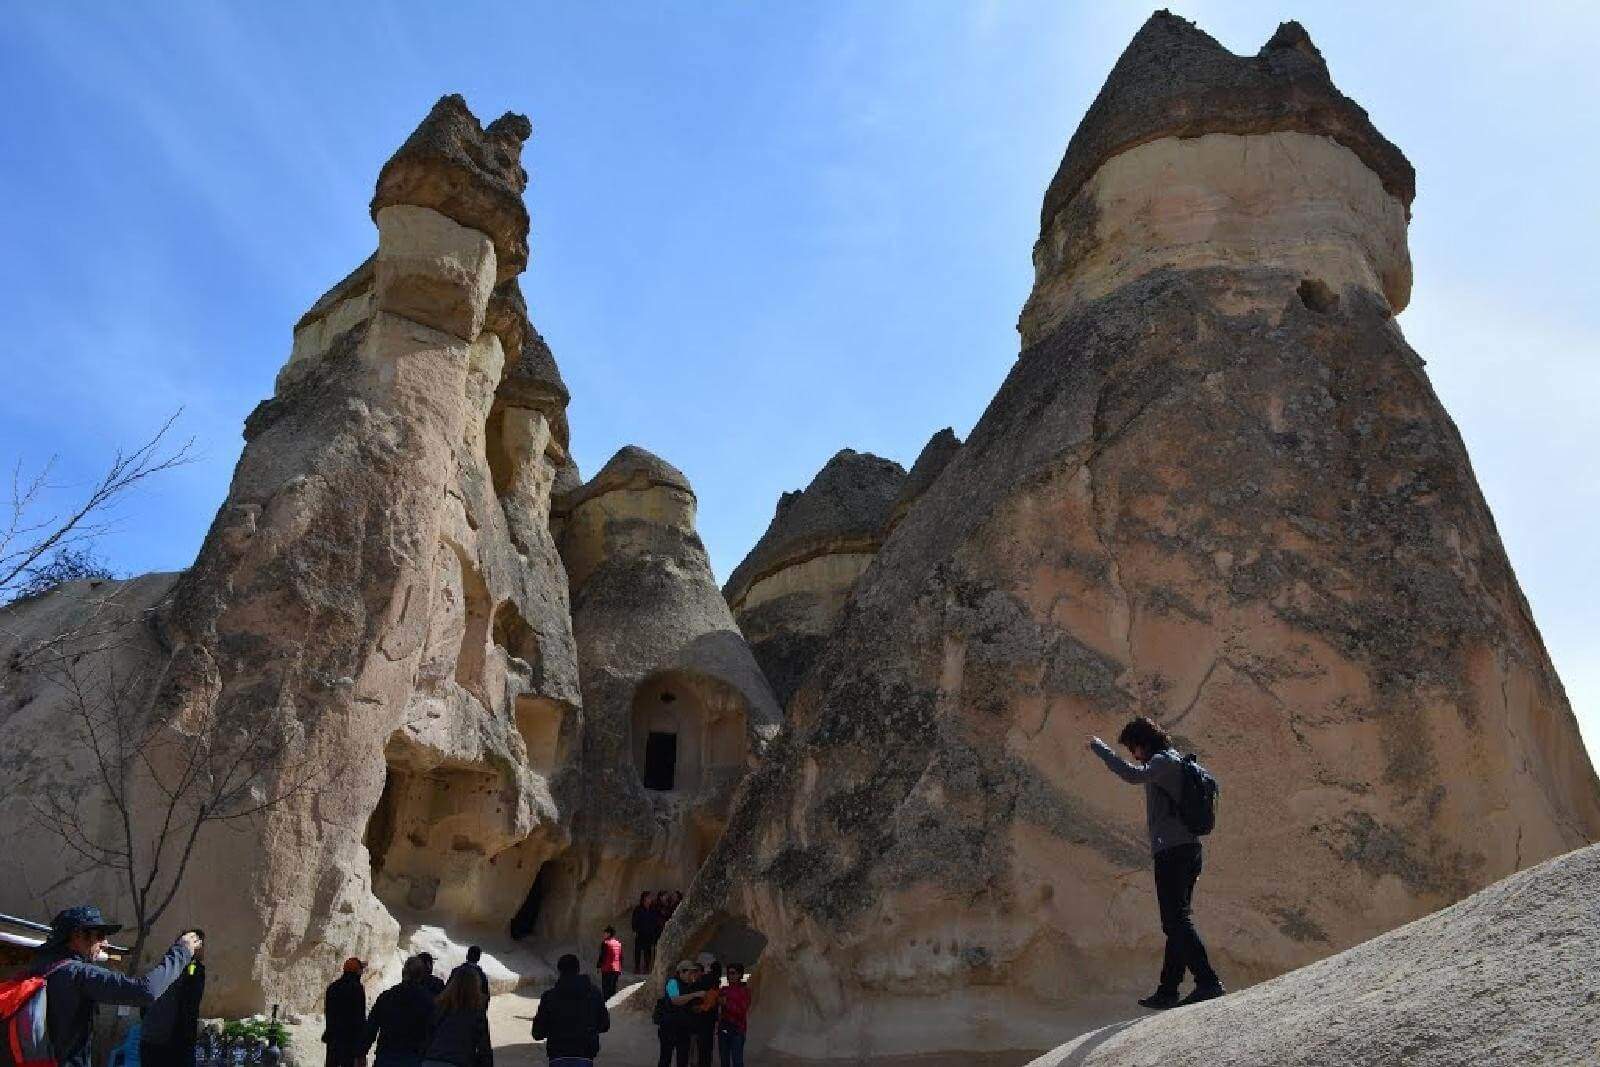 Fairy Chimneys in Paşabağı (Priests) Valley - Cappadocia